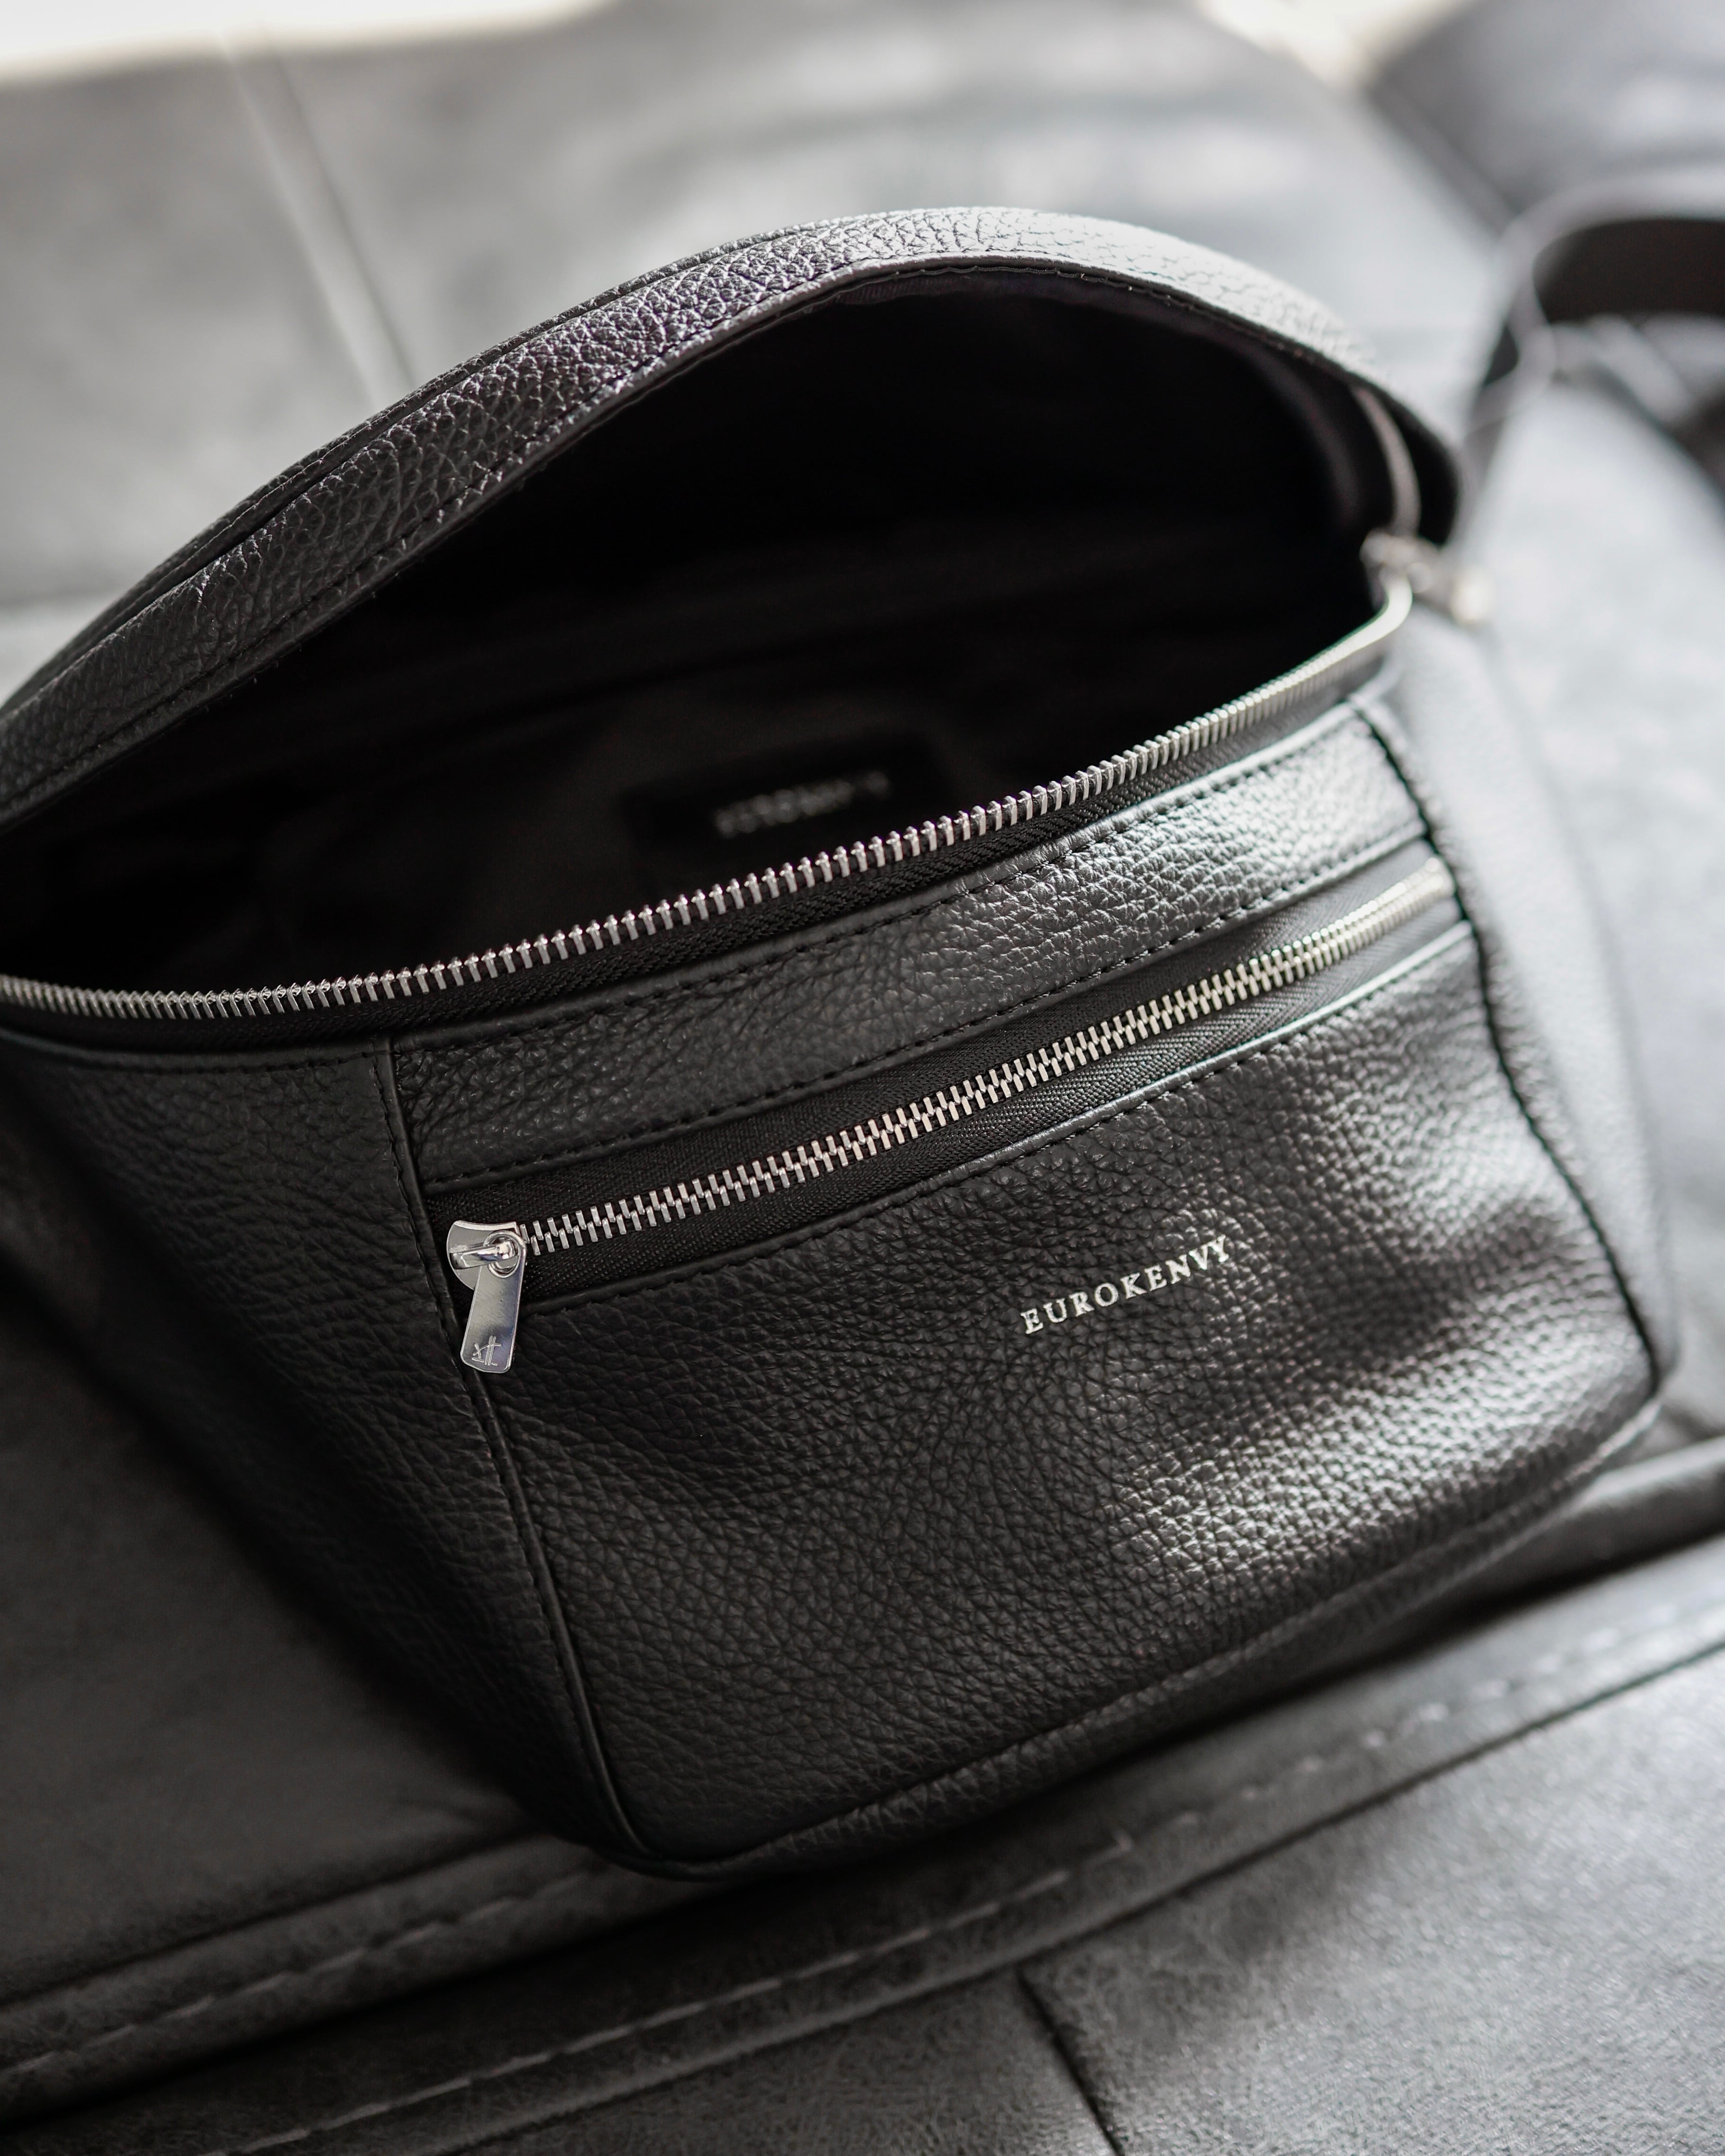 Italian Shrink Leather Bodybag【高級イタリアレザー】 | EUROKENVY®︎